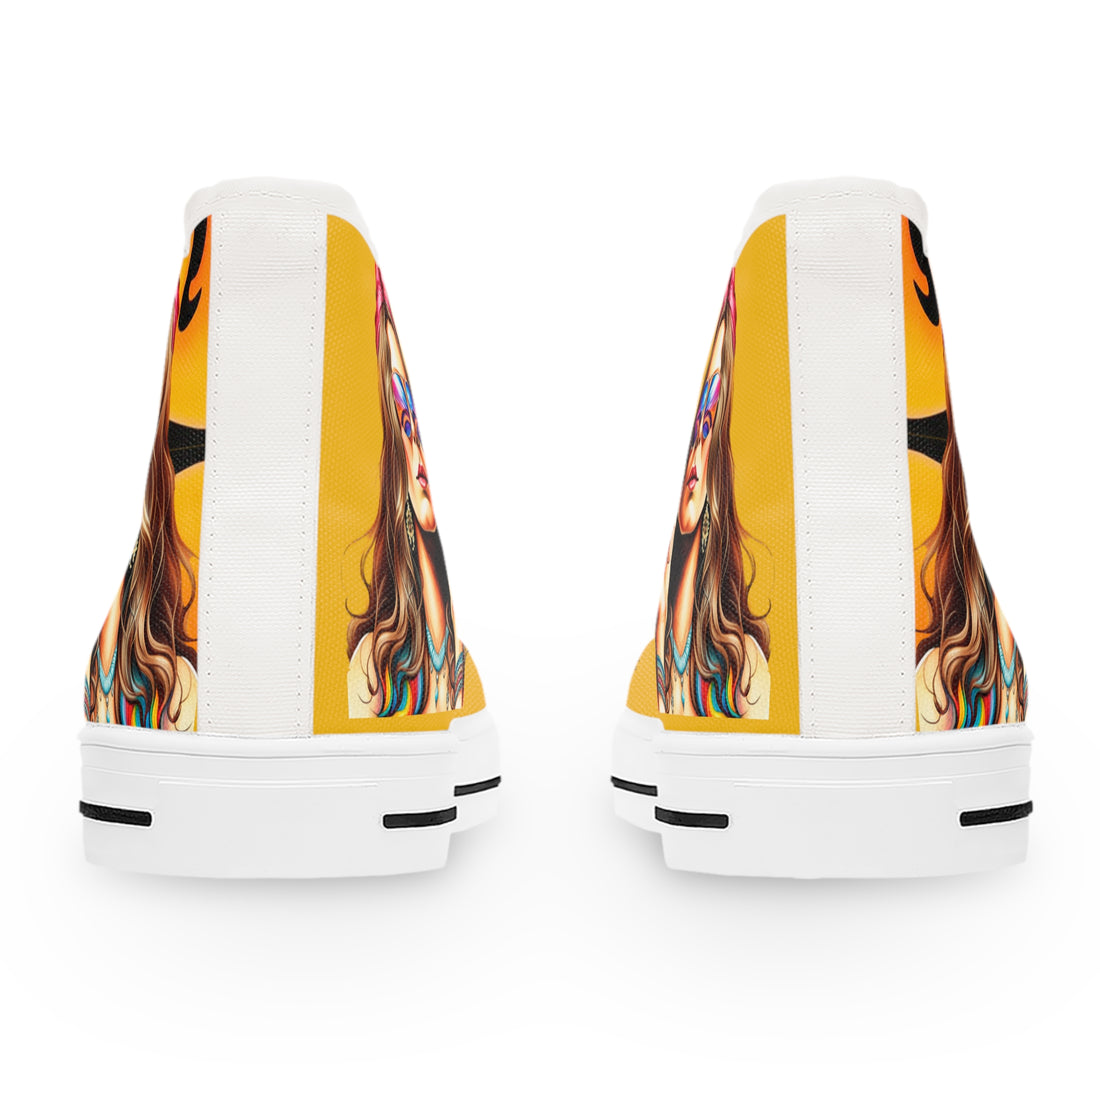 Sneakers ECO Janis Joplin - Amarillo